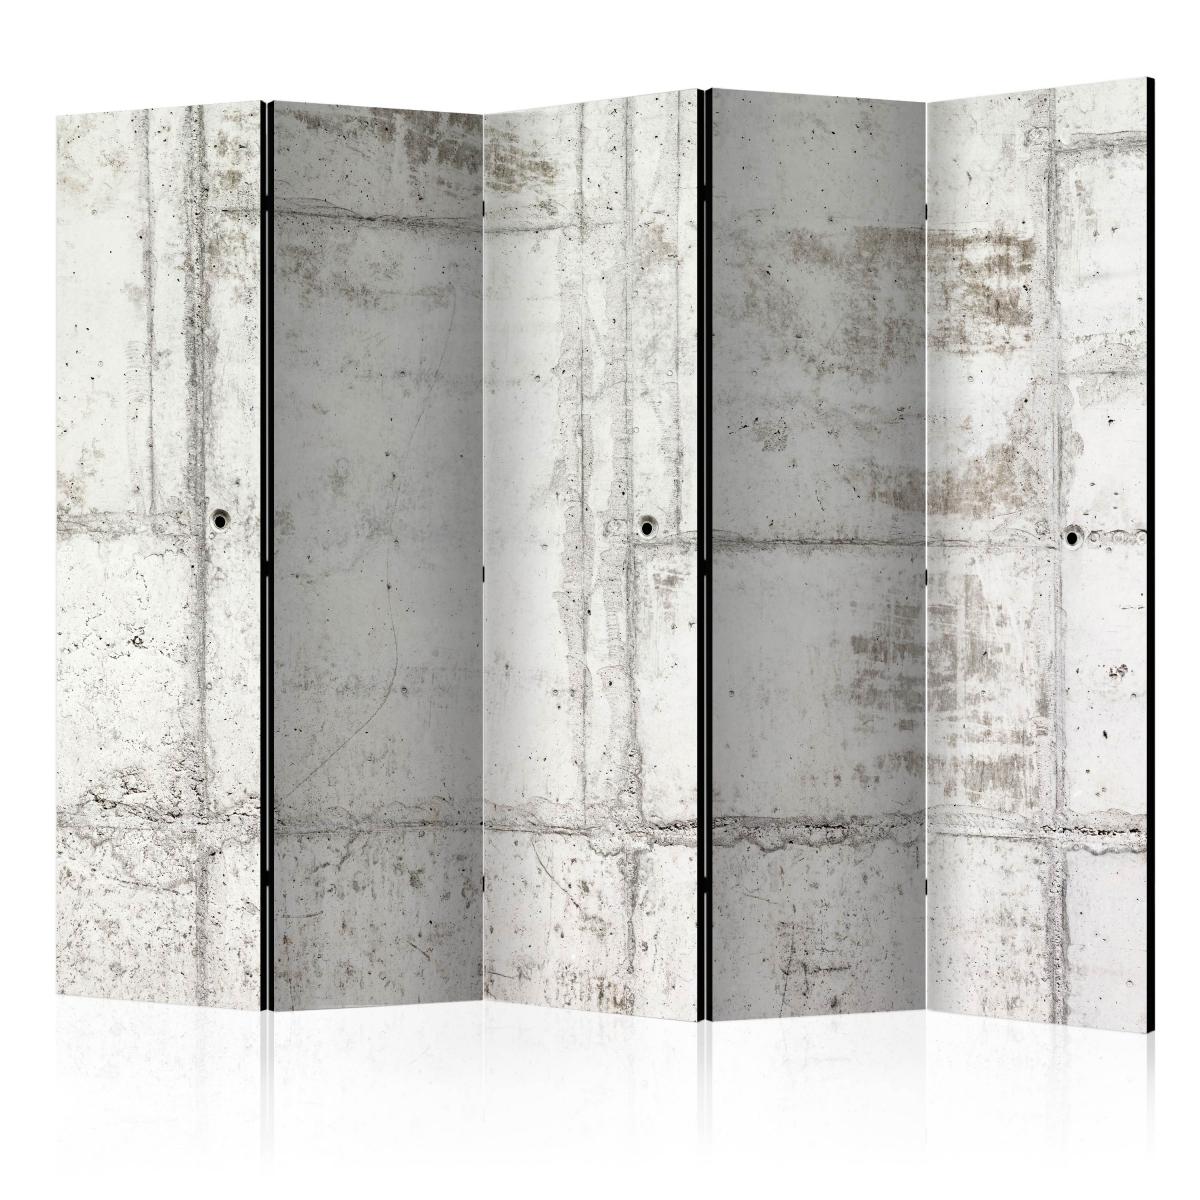 Bimago - Paravent 5 volets - Urban Bunker II [Room Dividers] - Décoration, image, art | 225x172 cm | XL - Grand Format | - Cloisons